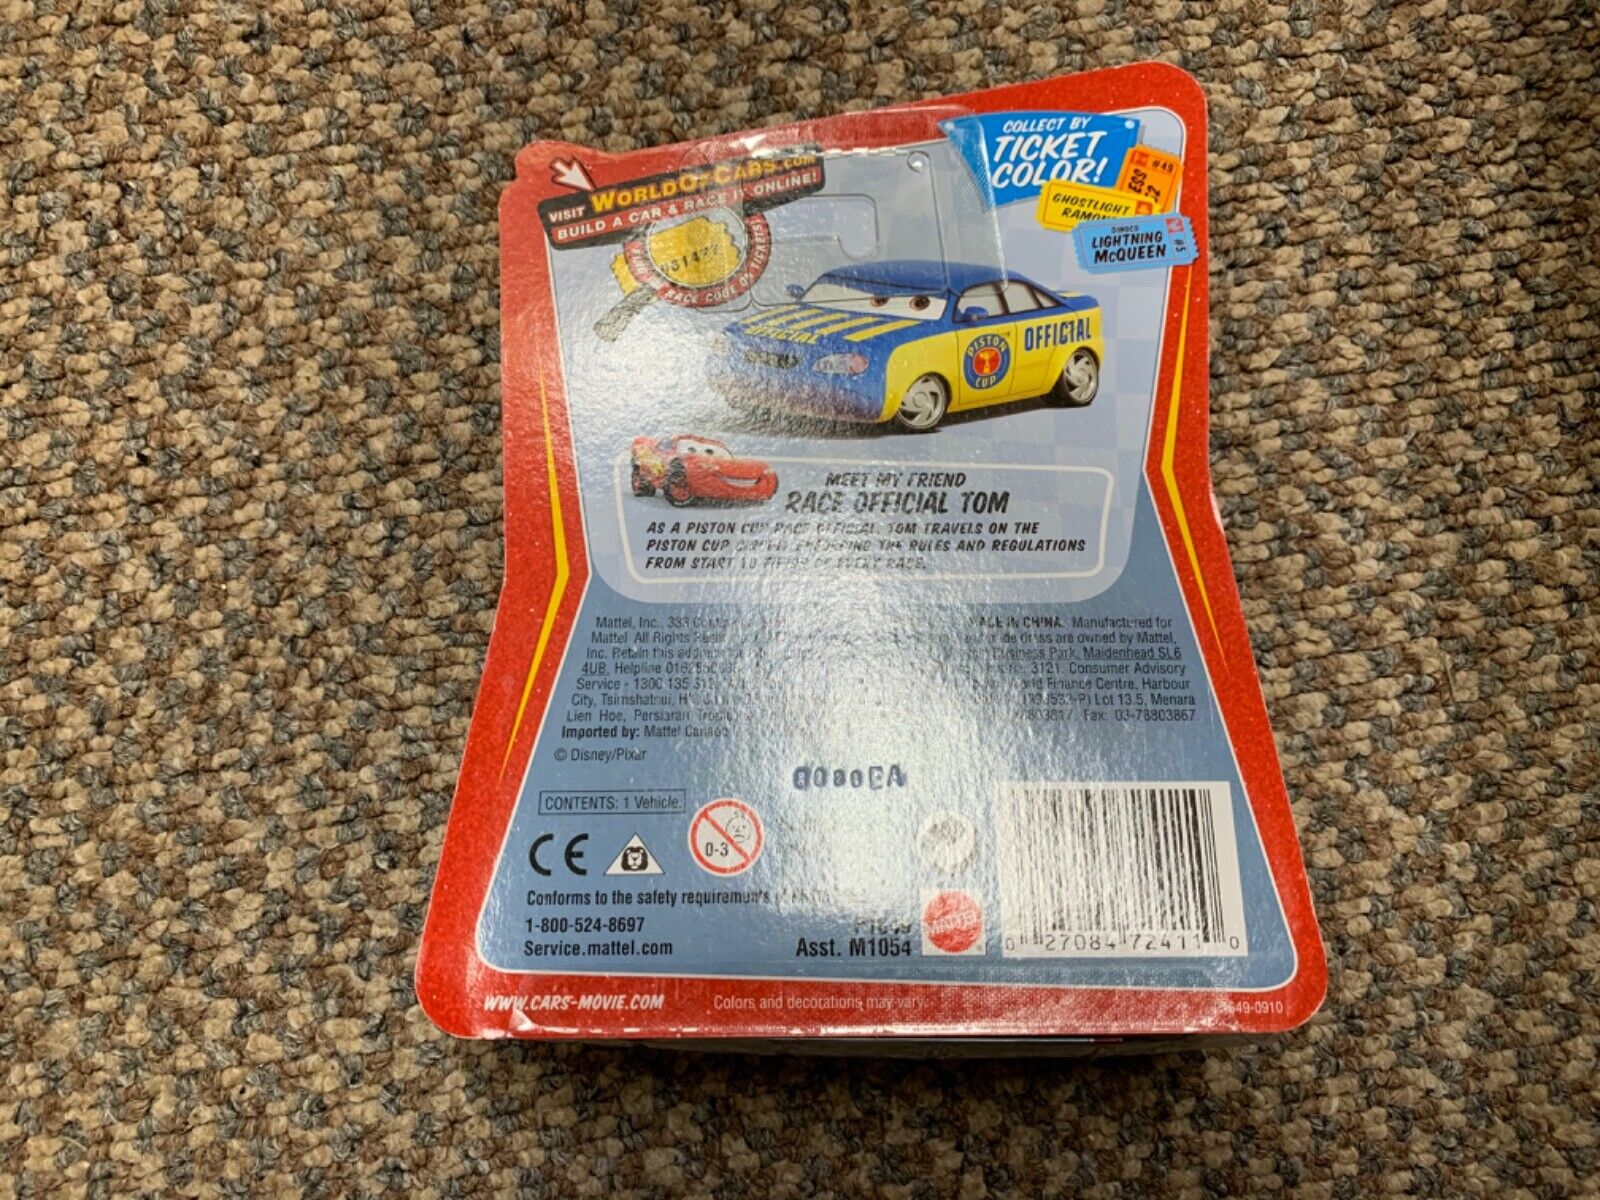 Disney Pixar Cars Race O Rama Tumbleweed Lightning McQueen